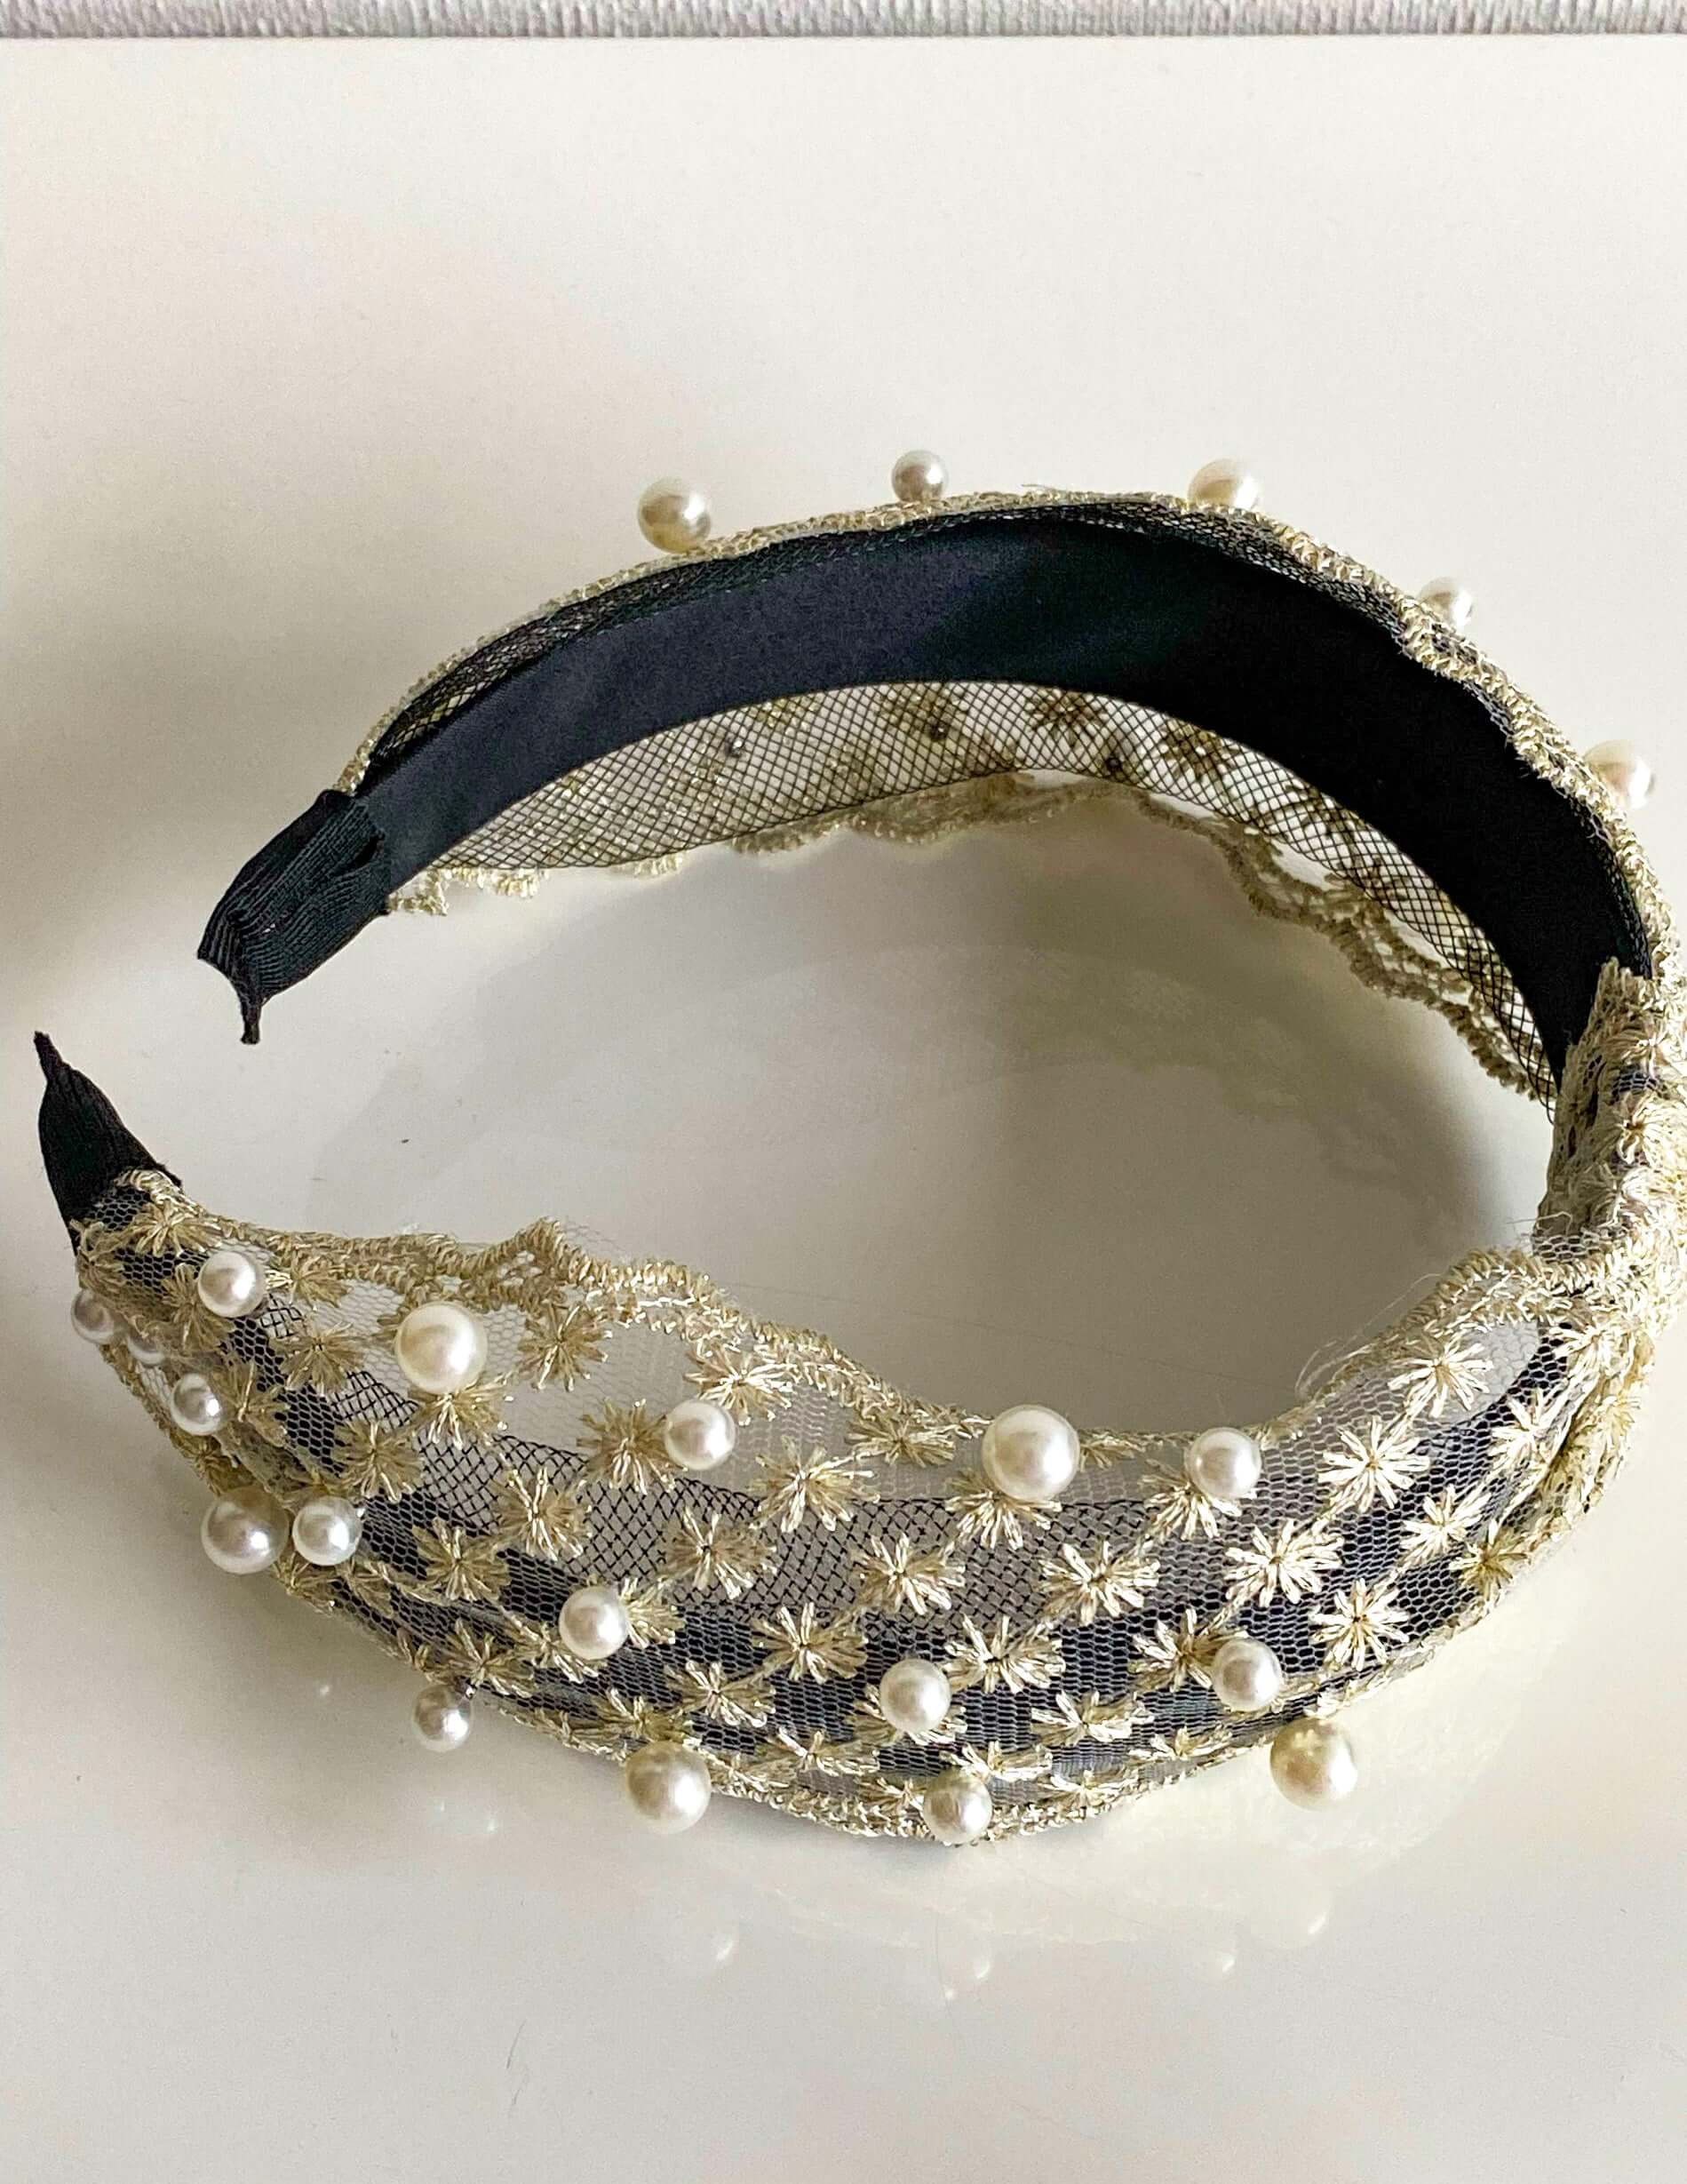 Headband accessories, accessory, apparel & accessories, fabric headband, hair accessories, head band, headband, knotted headband, lace headband